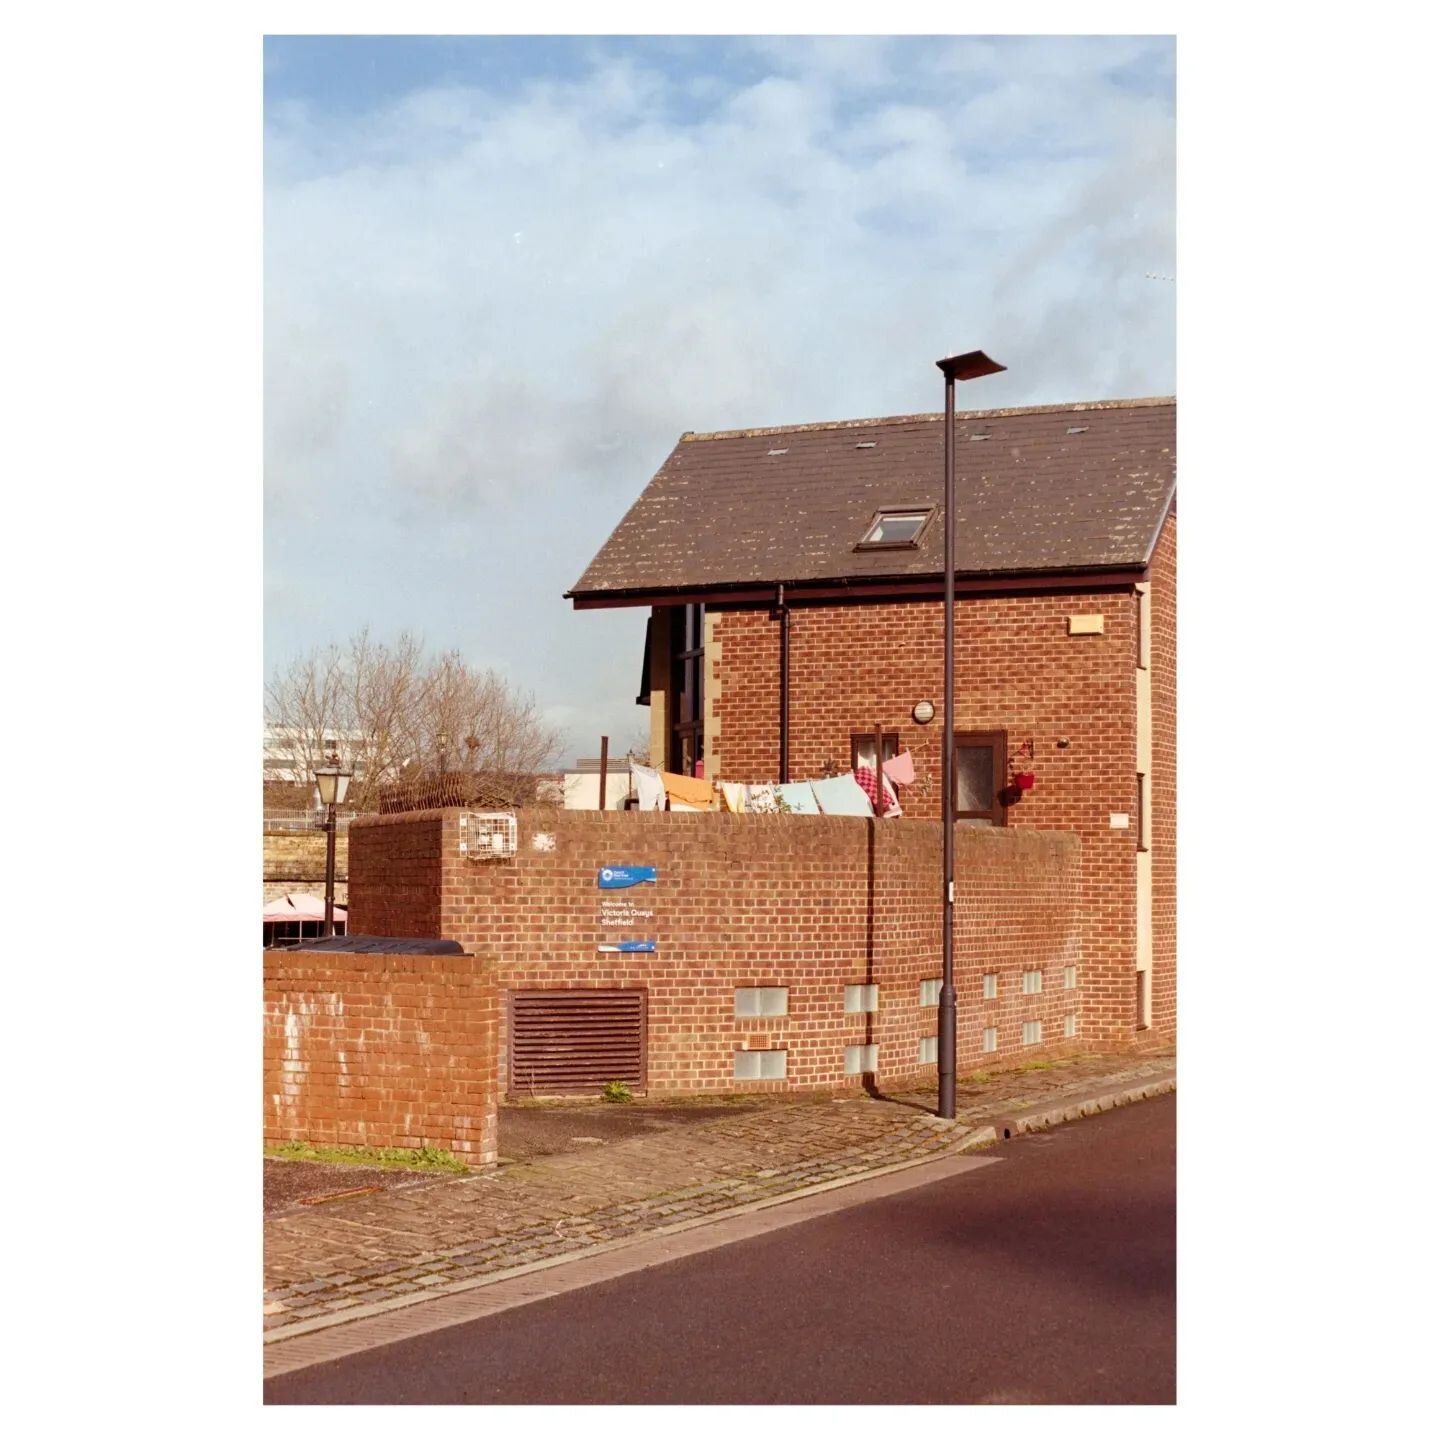 At the Canal. 

Taken on February's #tycephotowalk

📷 Nikon F
🎞 Fuji Superia 200 (Expired)
Dev by @jandastudiosheffield 
Scanned using a Sony 7iii &amp; @negativelabpro

#Sheffield #England #VintageNikon #FujiSuperiaFilm #Photography #Architecture 